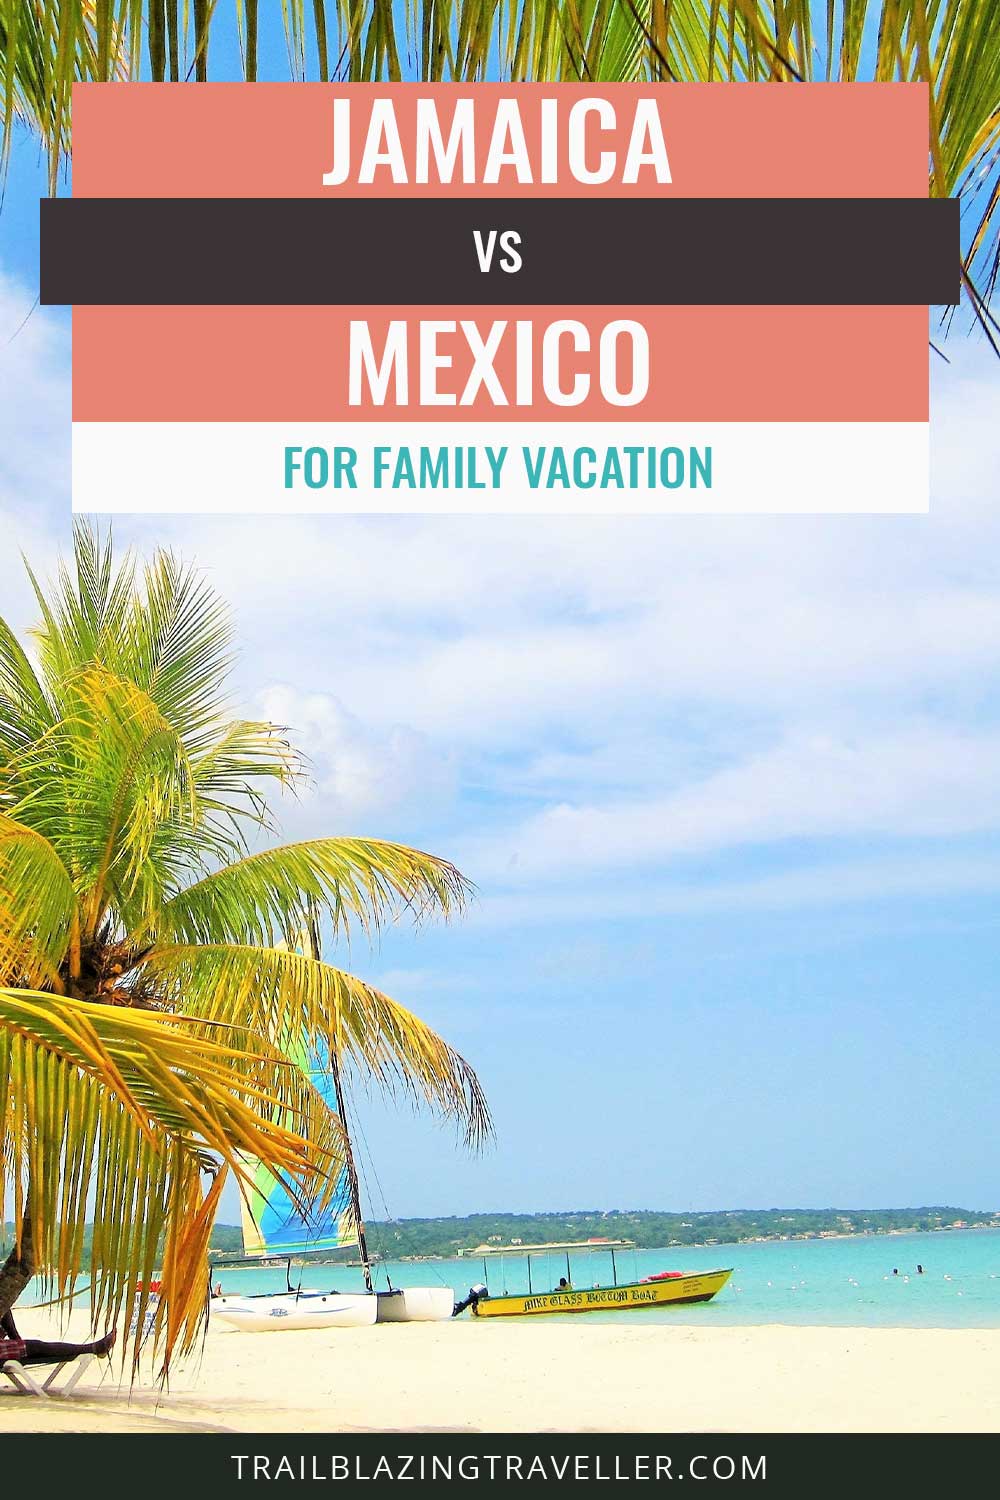 Jamaica vs. Mexico for Family Vacation